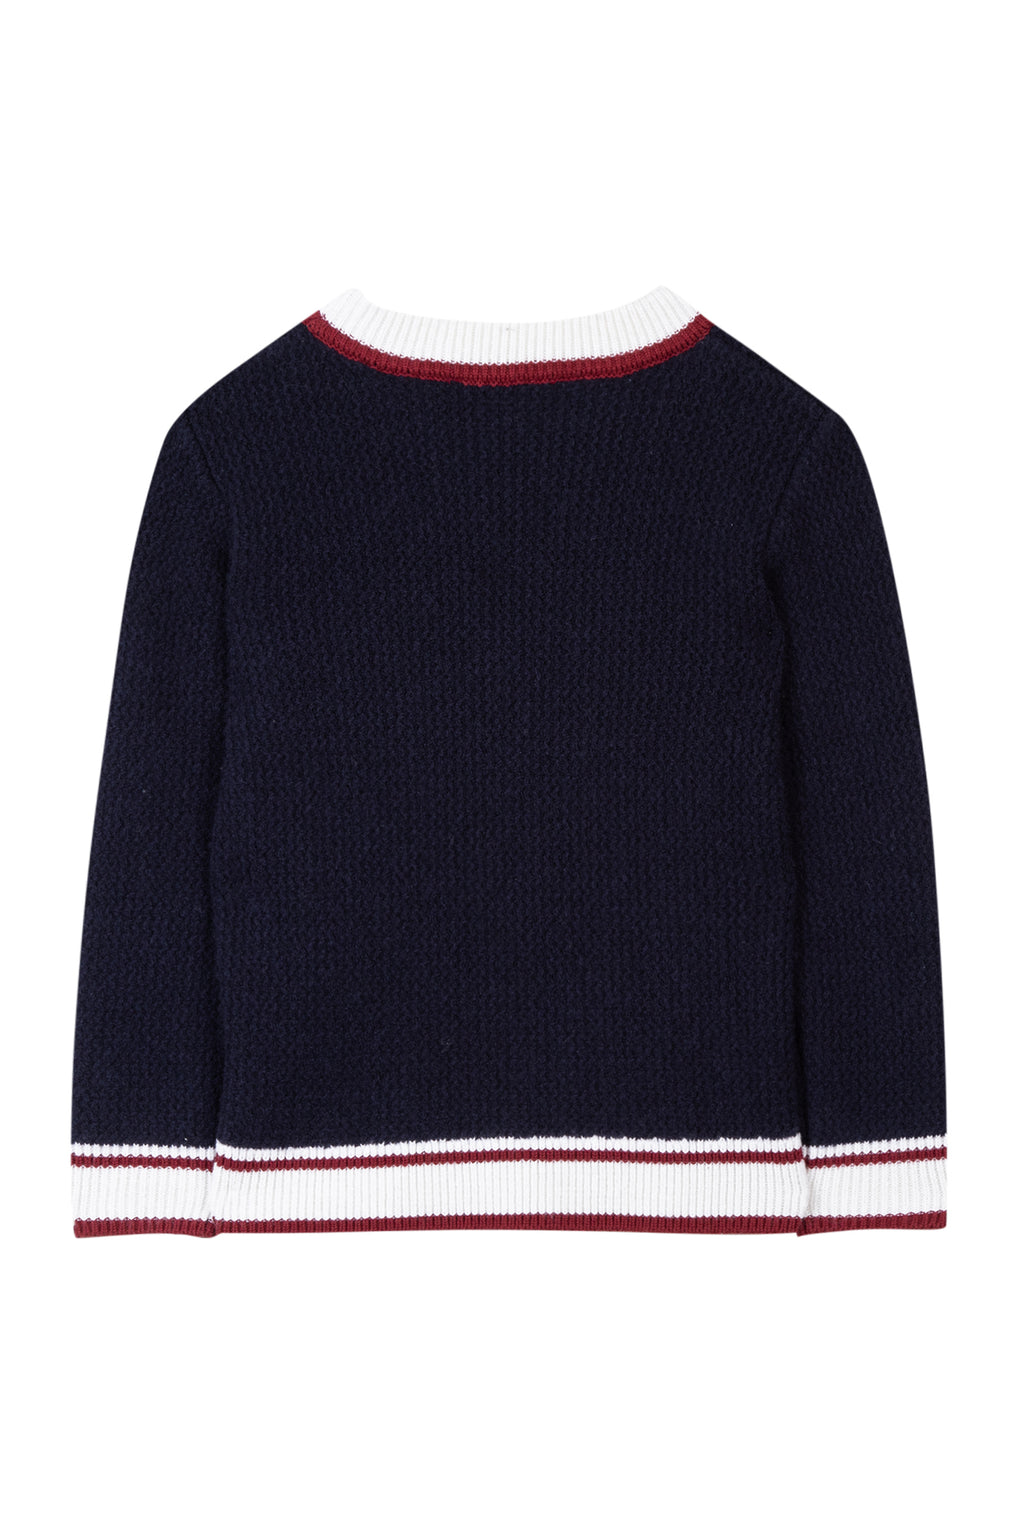 Sweater - Navy knitting Round neck